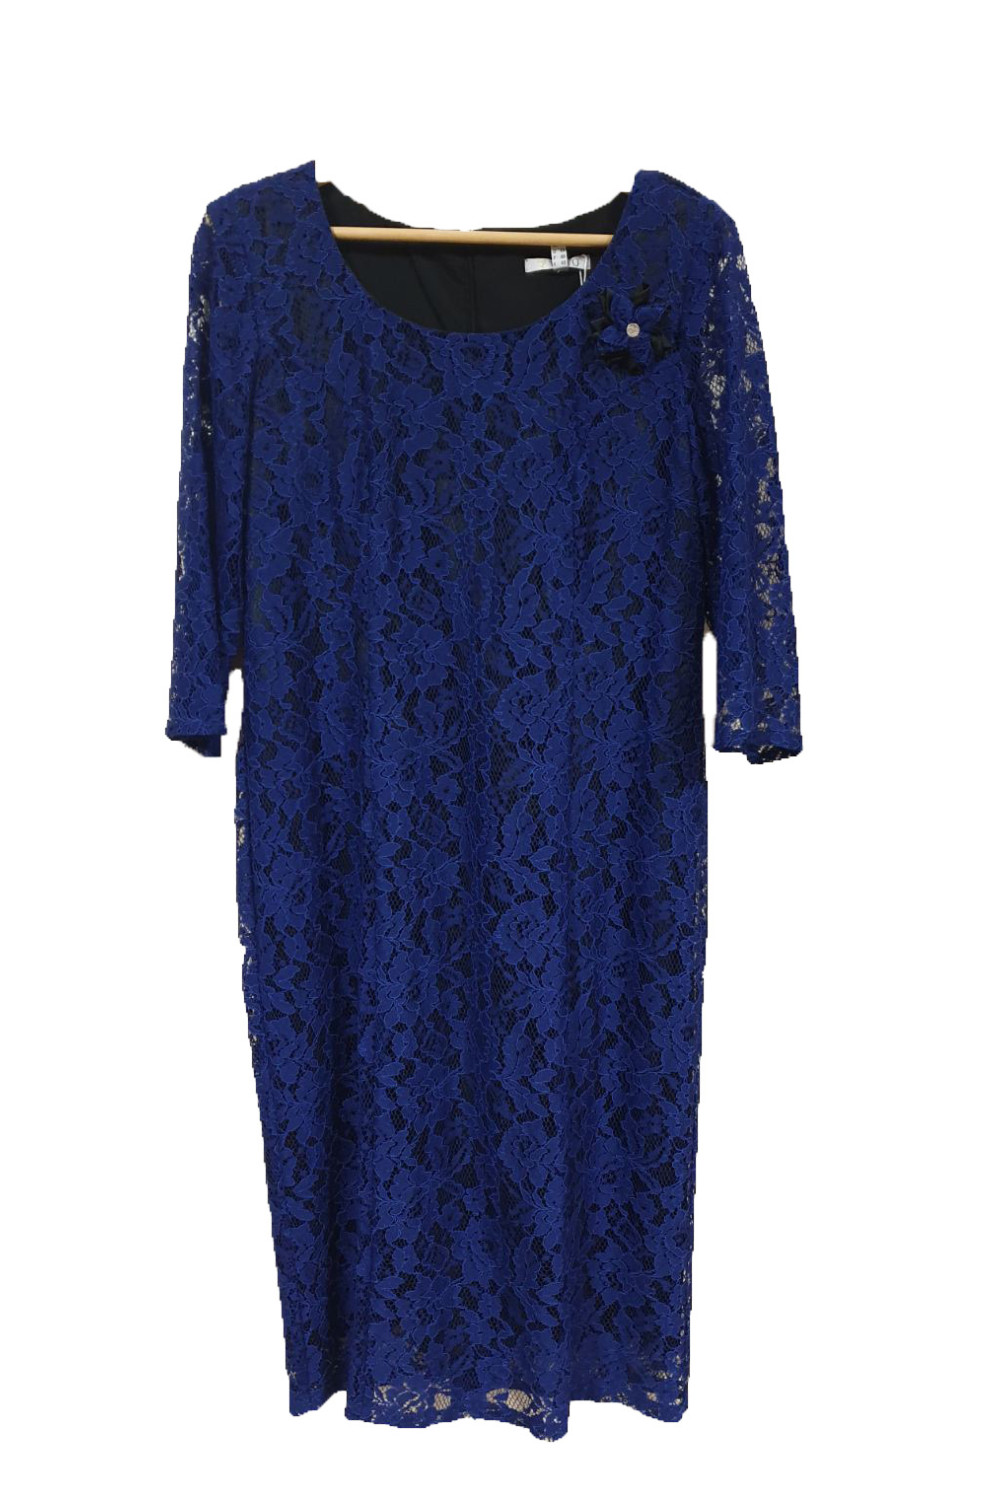 VETO Γυναικείο Φόρεμα 3/4 μανίκι μπλε F3677B